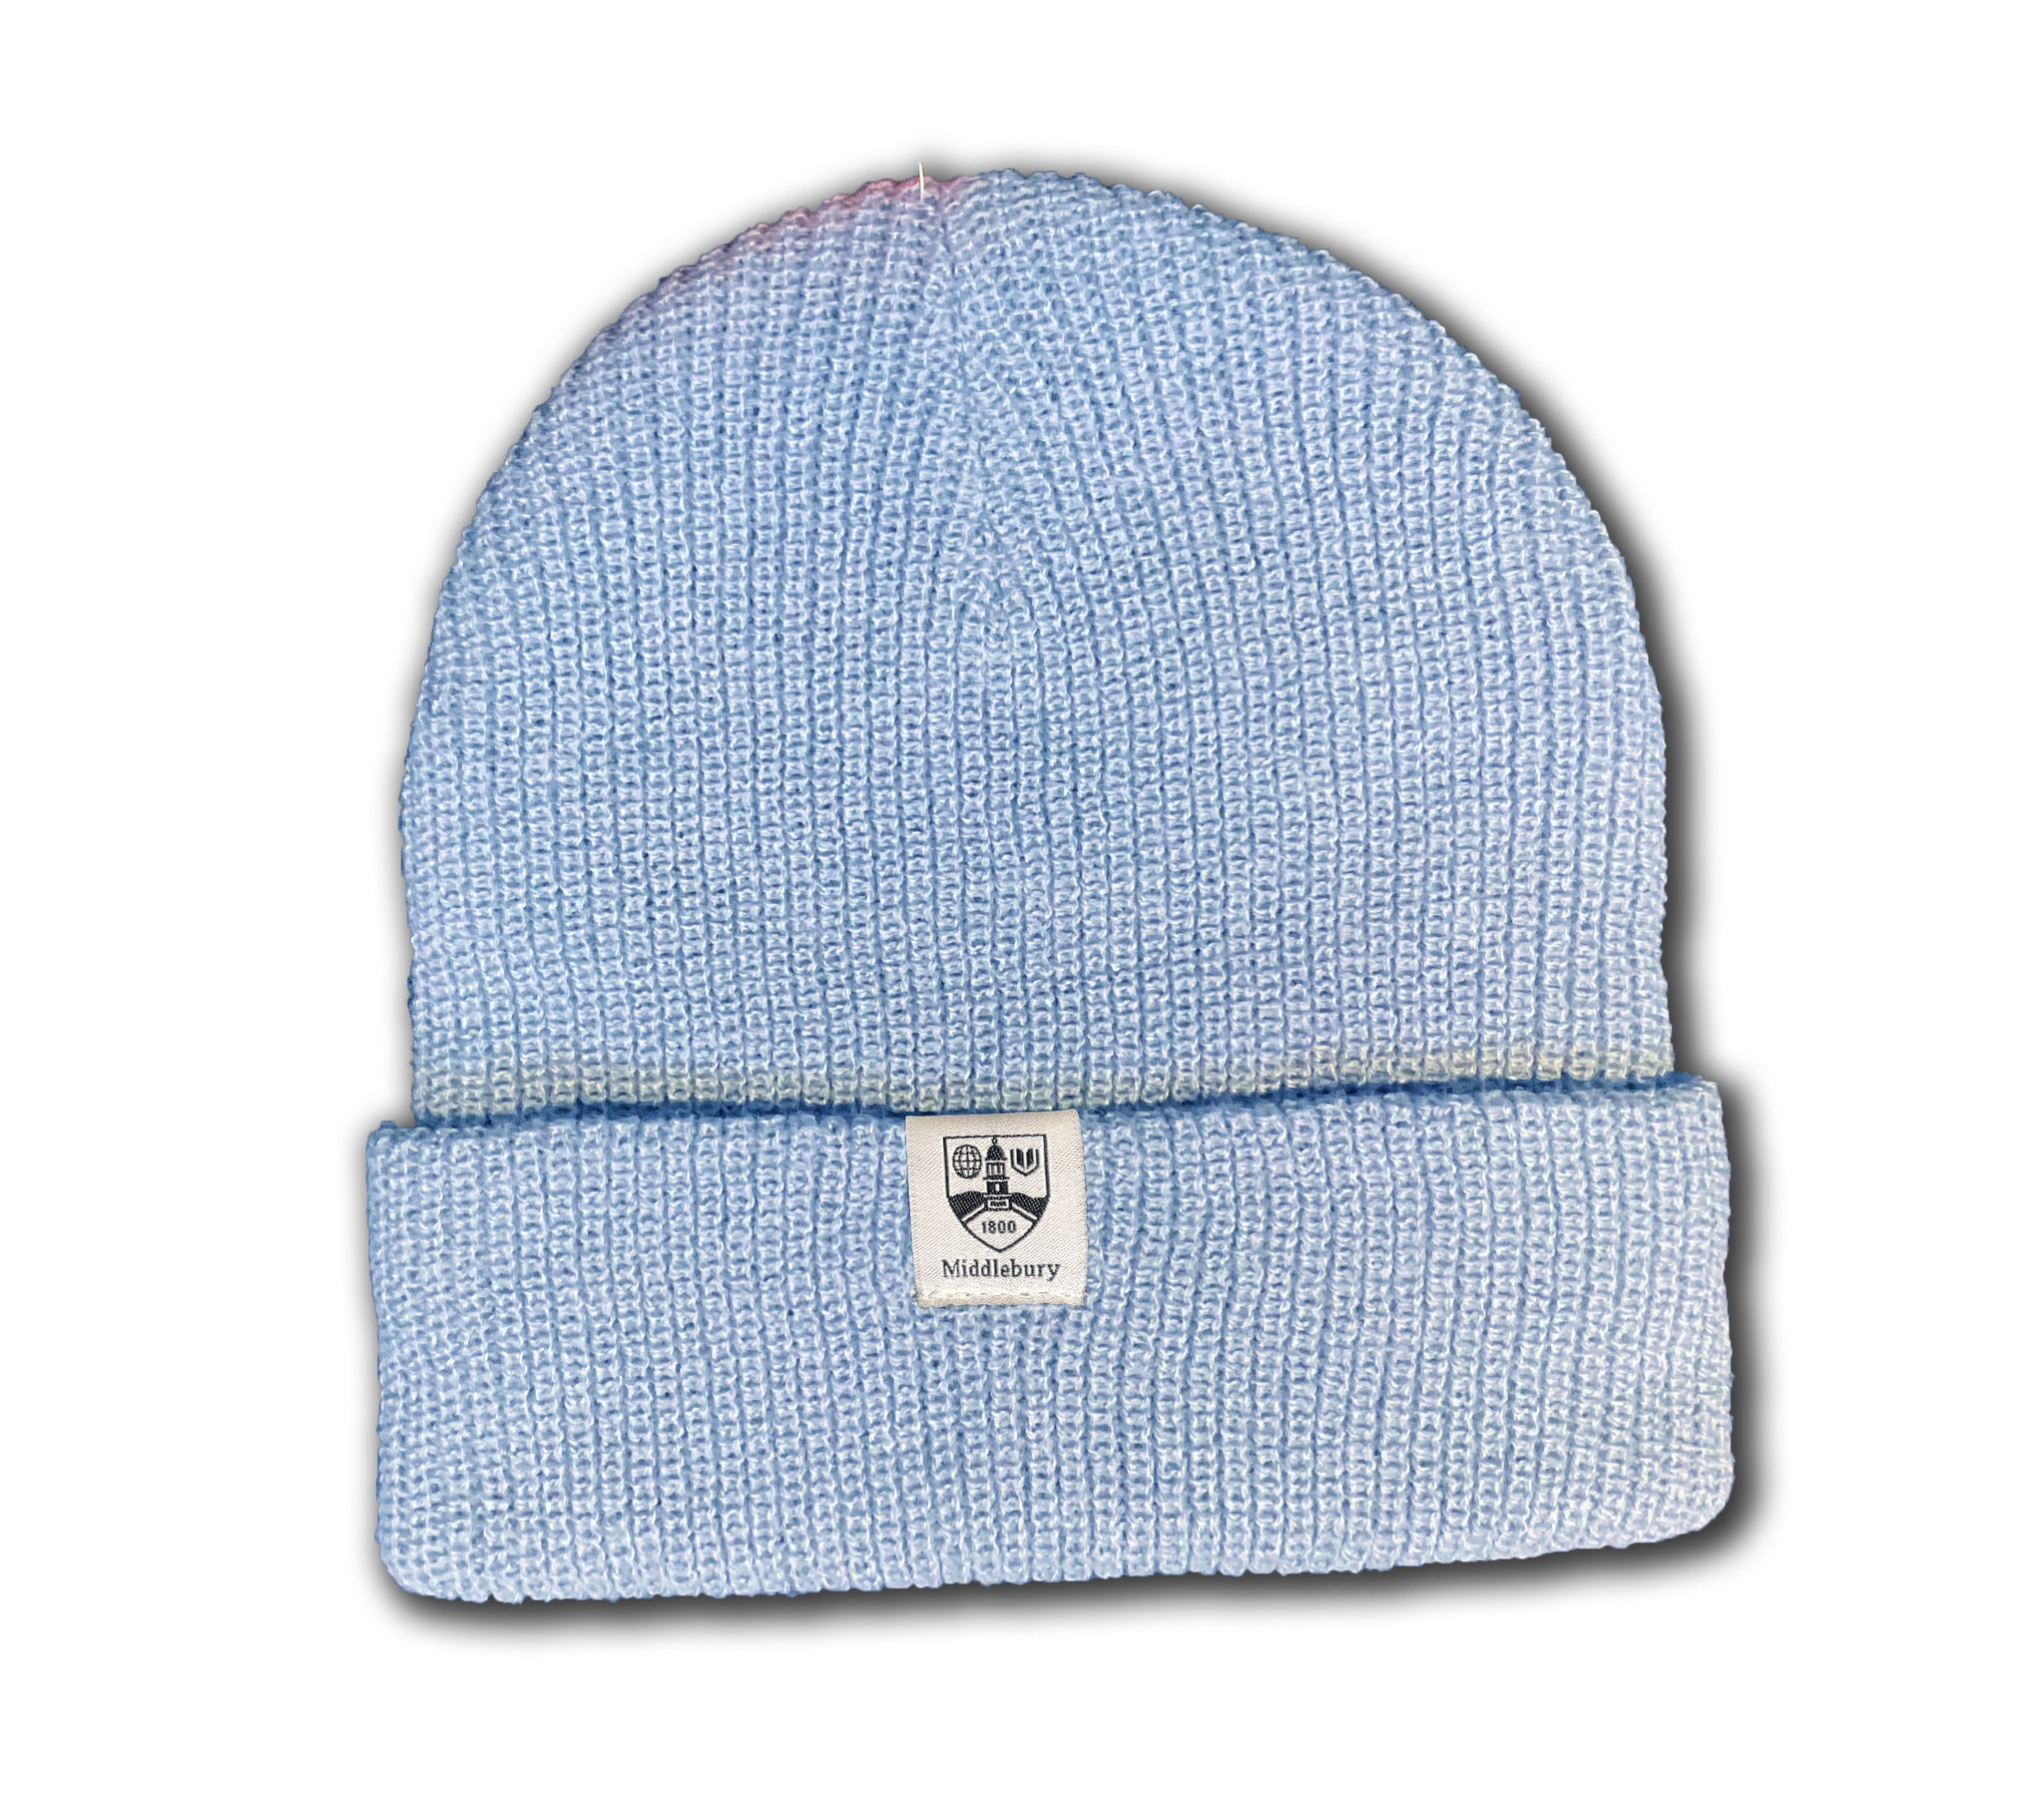 Middlebury Heather Cuff Knit Hat (Slate Blue)